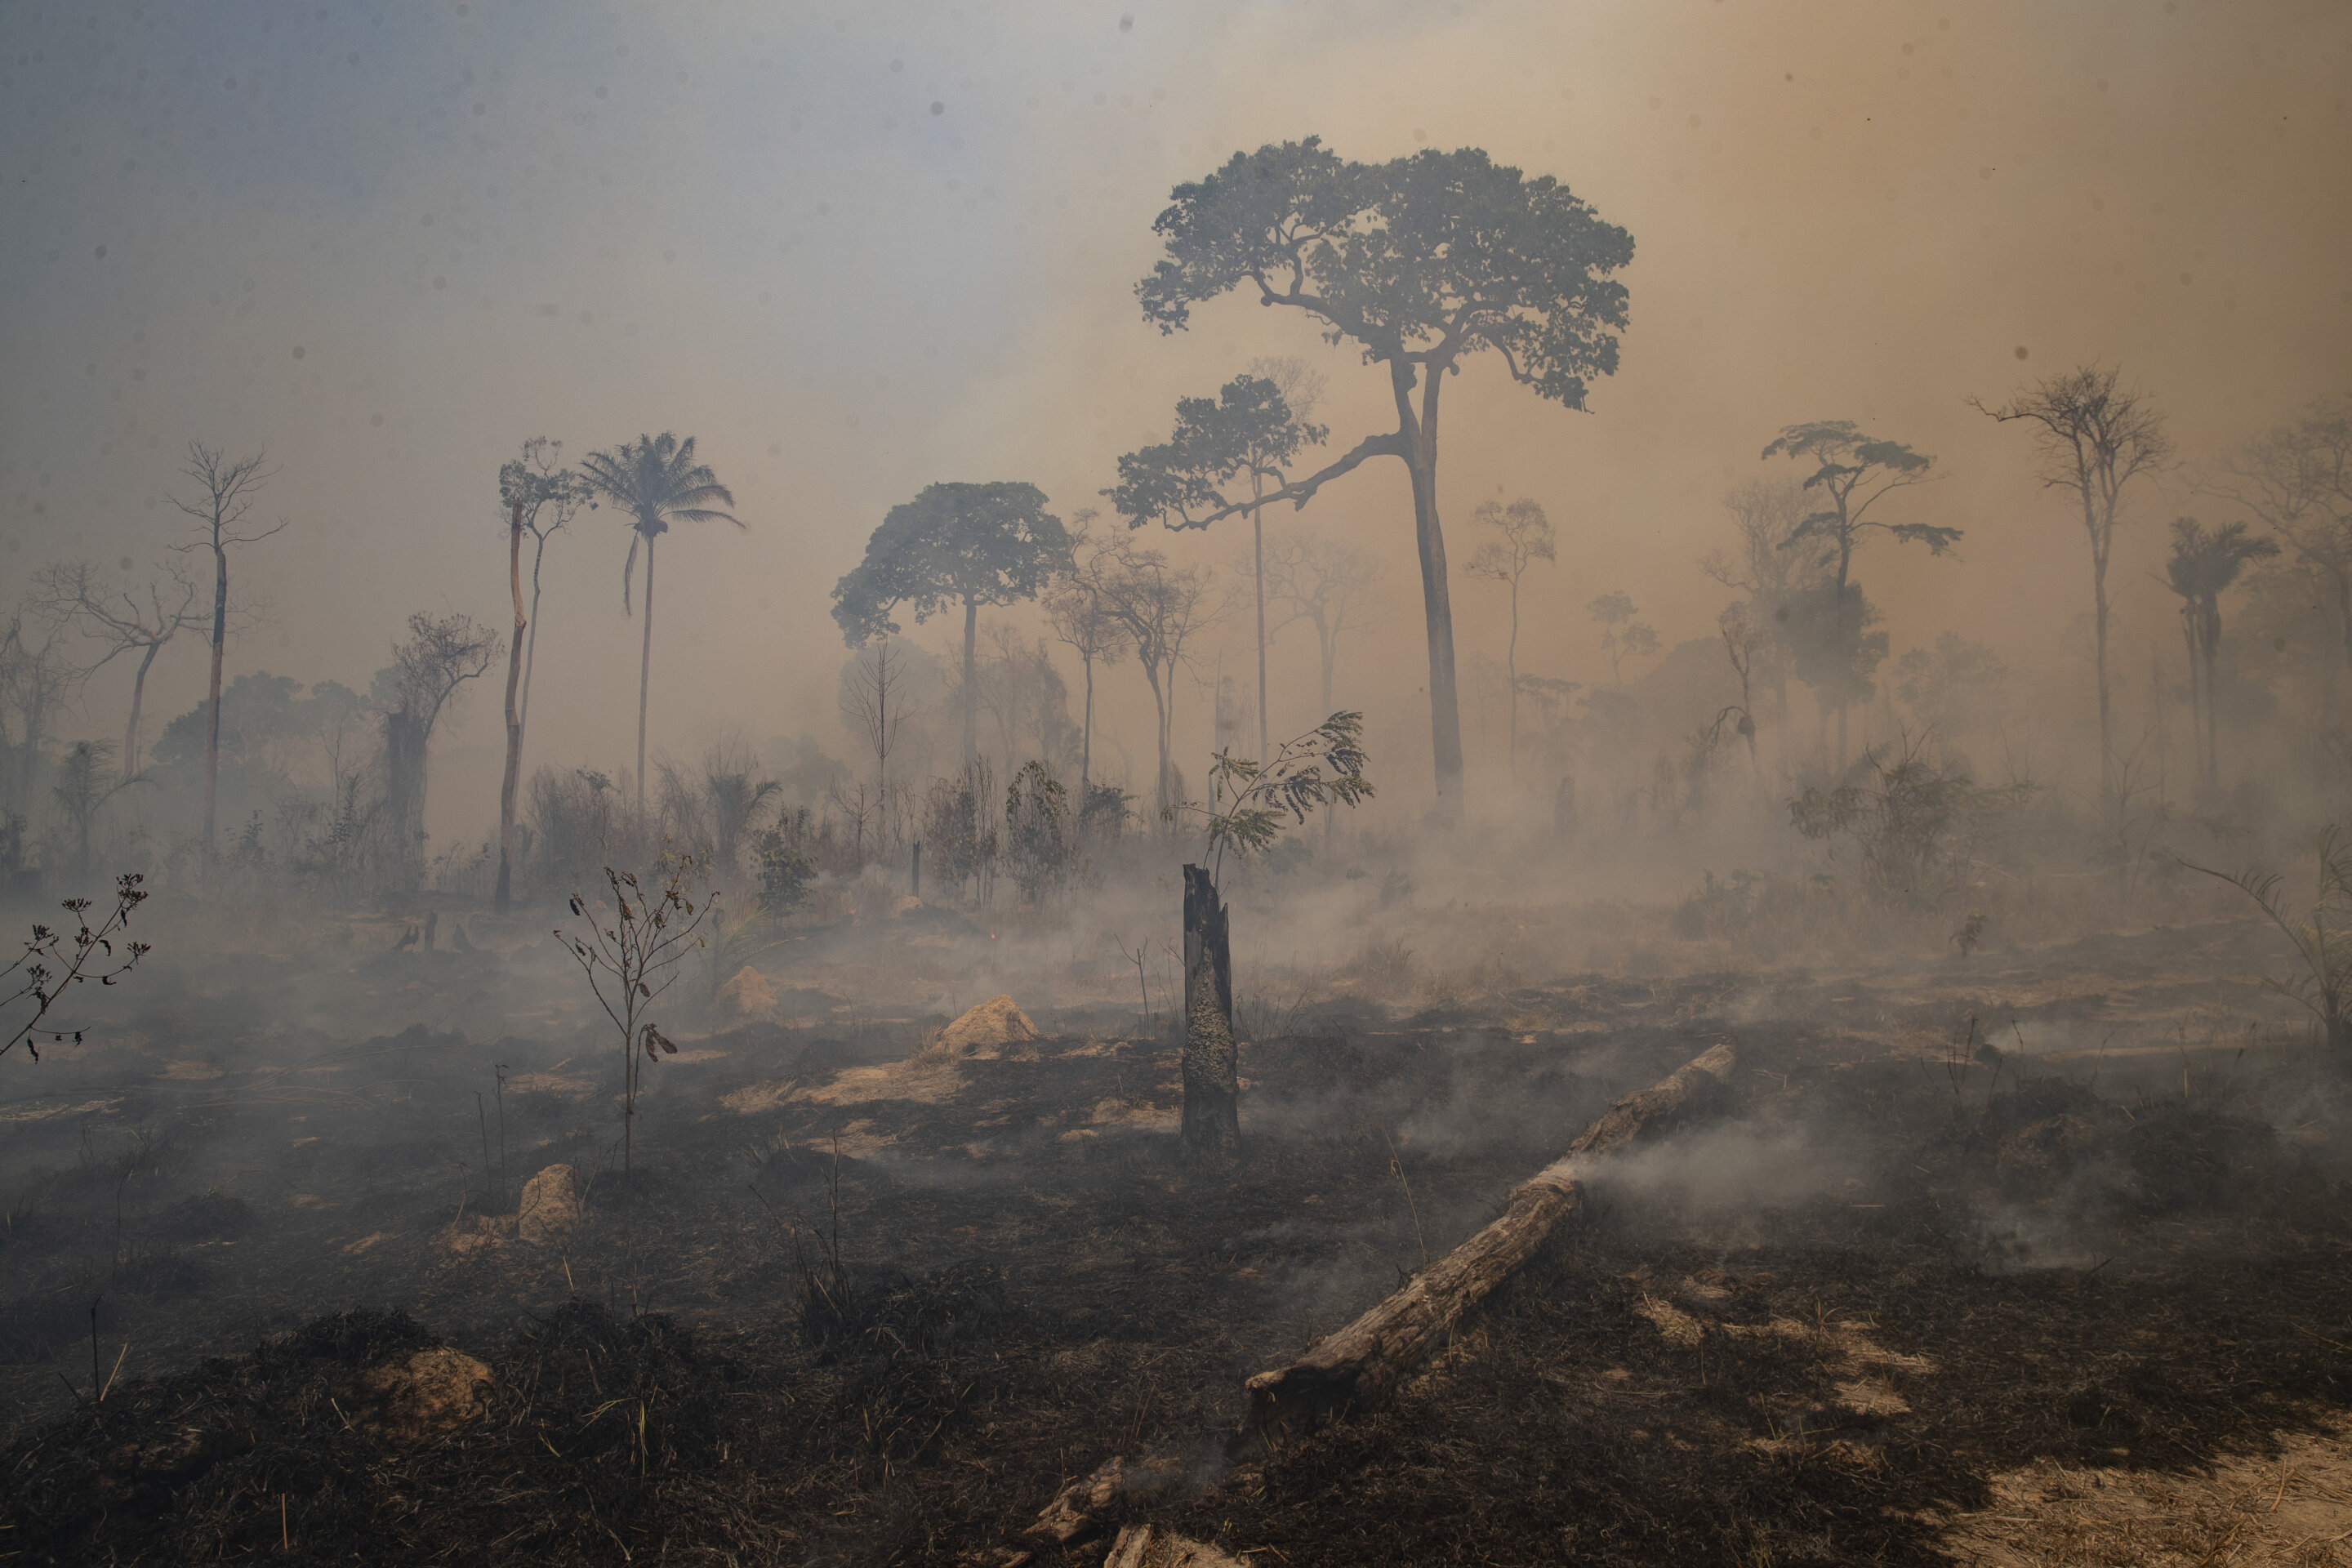 Brazil forest fire season underway and raising concern